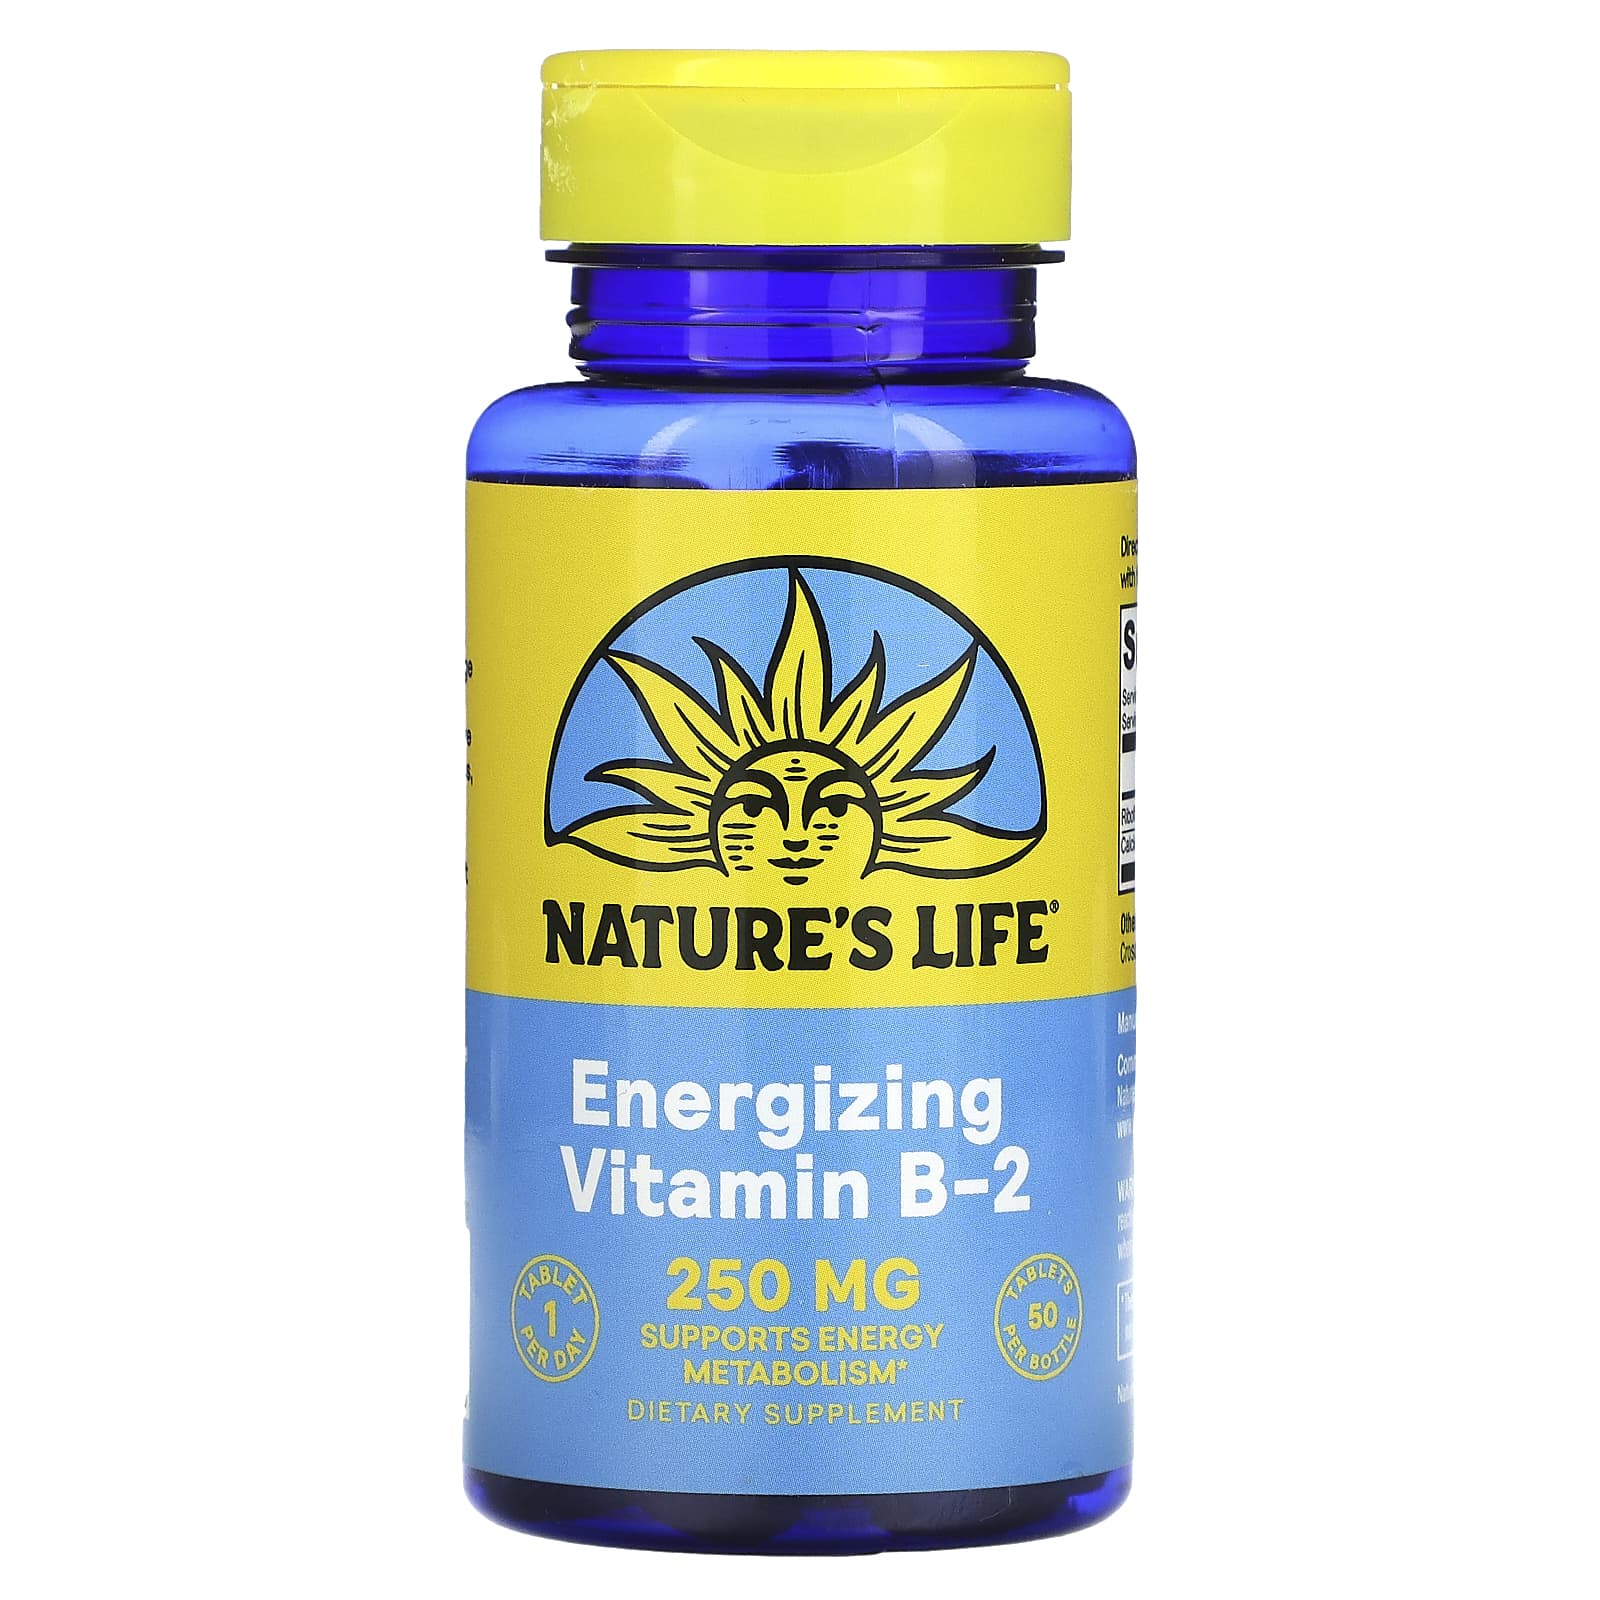 Energizing Vitamin B2 (250mg)